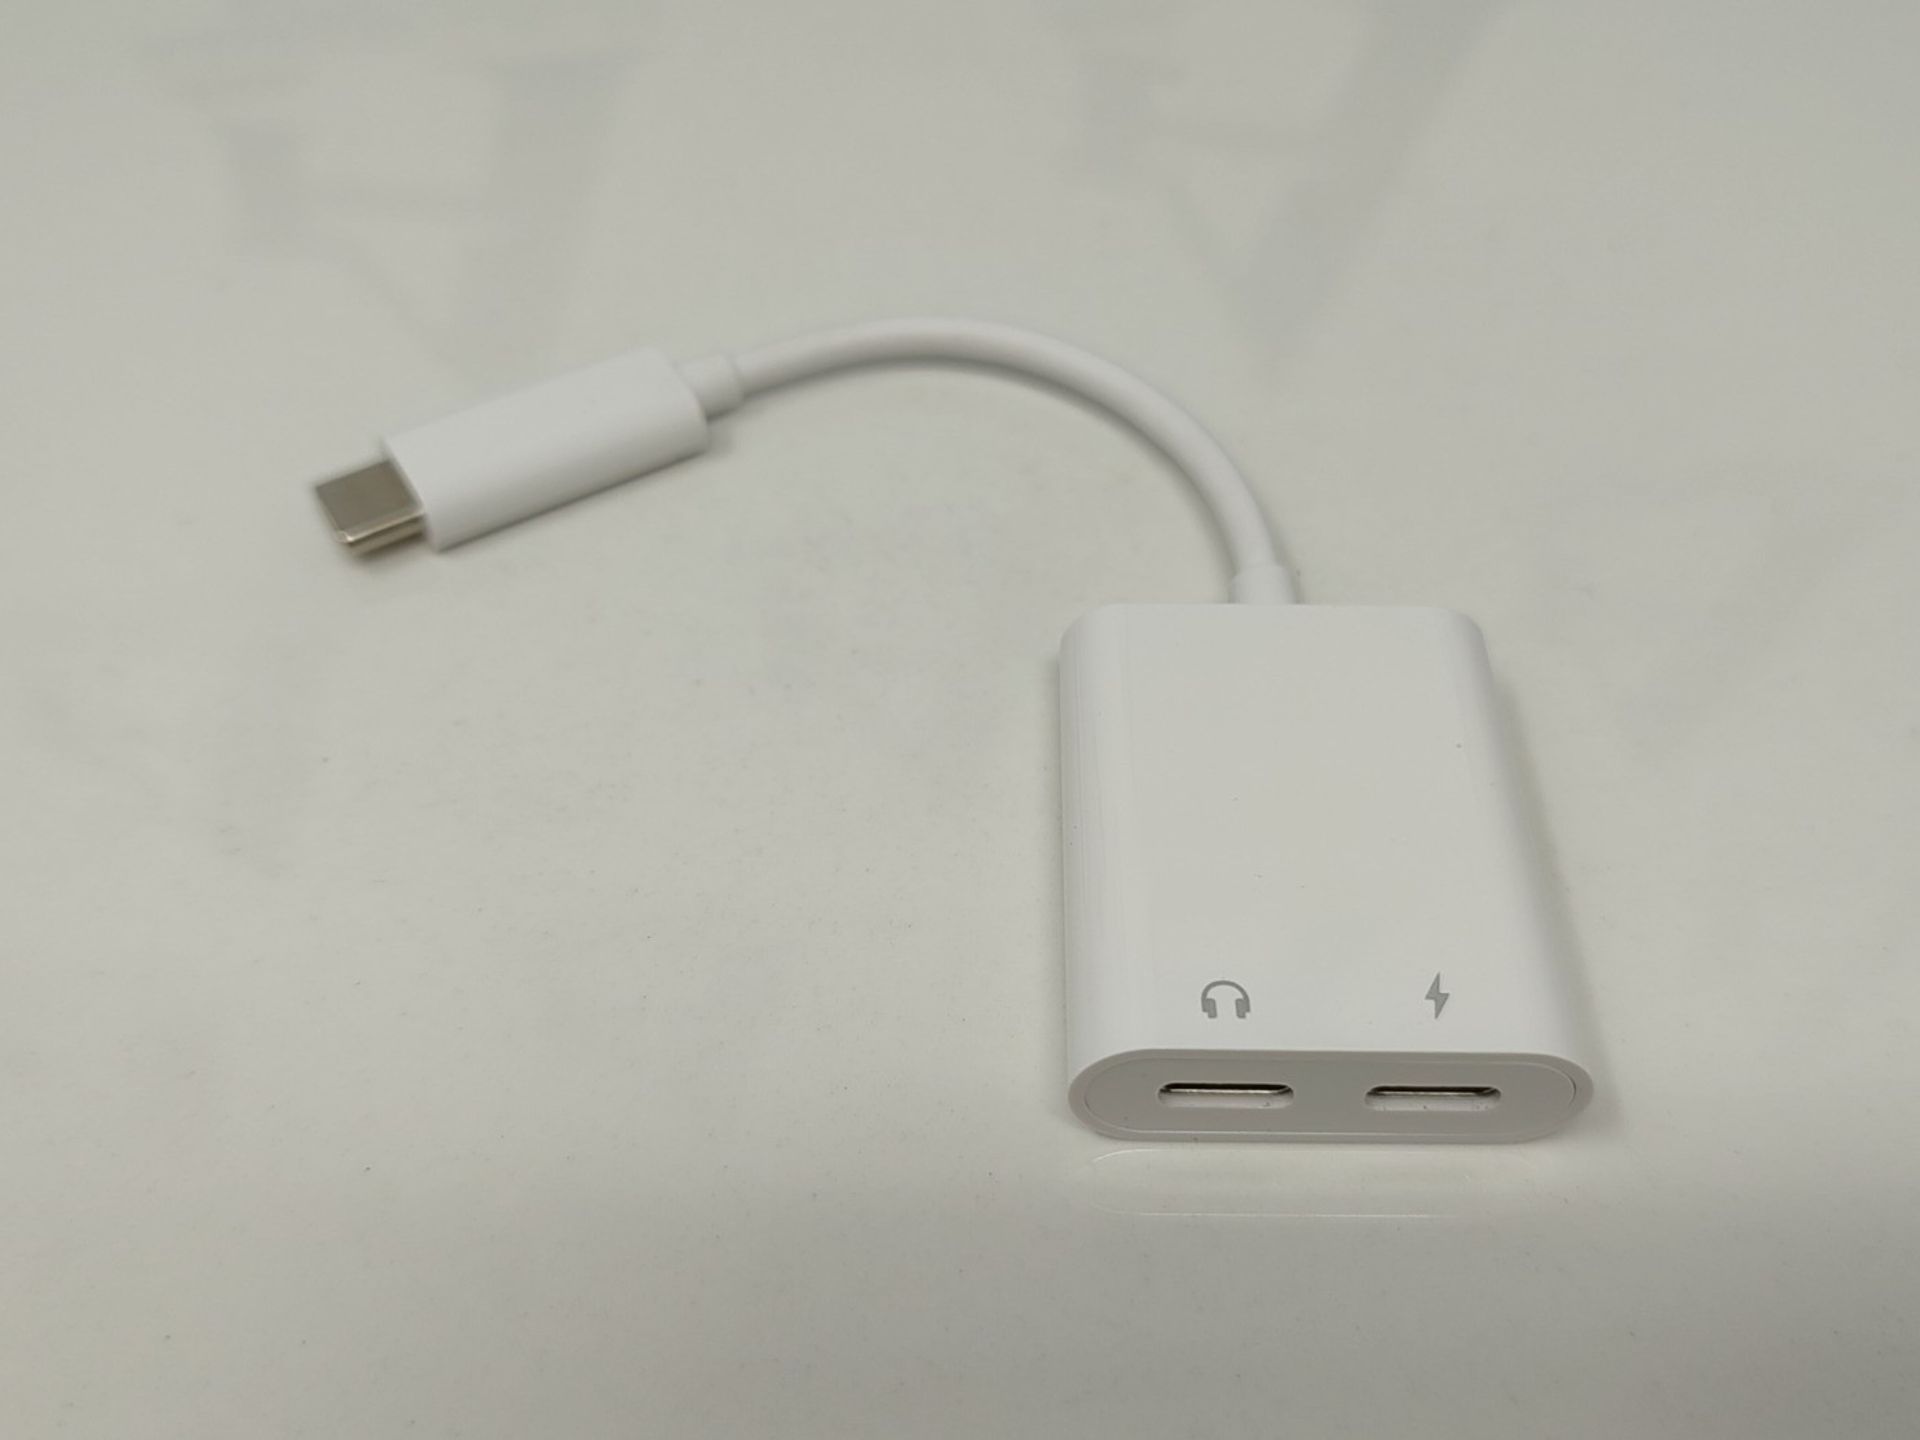 Belkin USB C RockStar adapter USB-C audio + charging (audio adapter with 60W USB-C Pow - Image 2 of 2